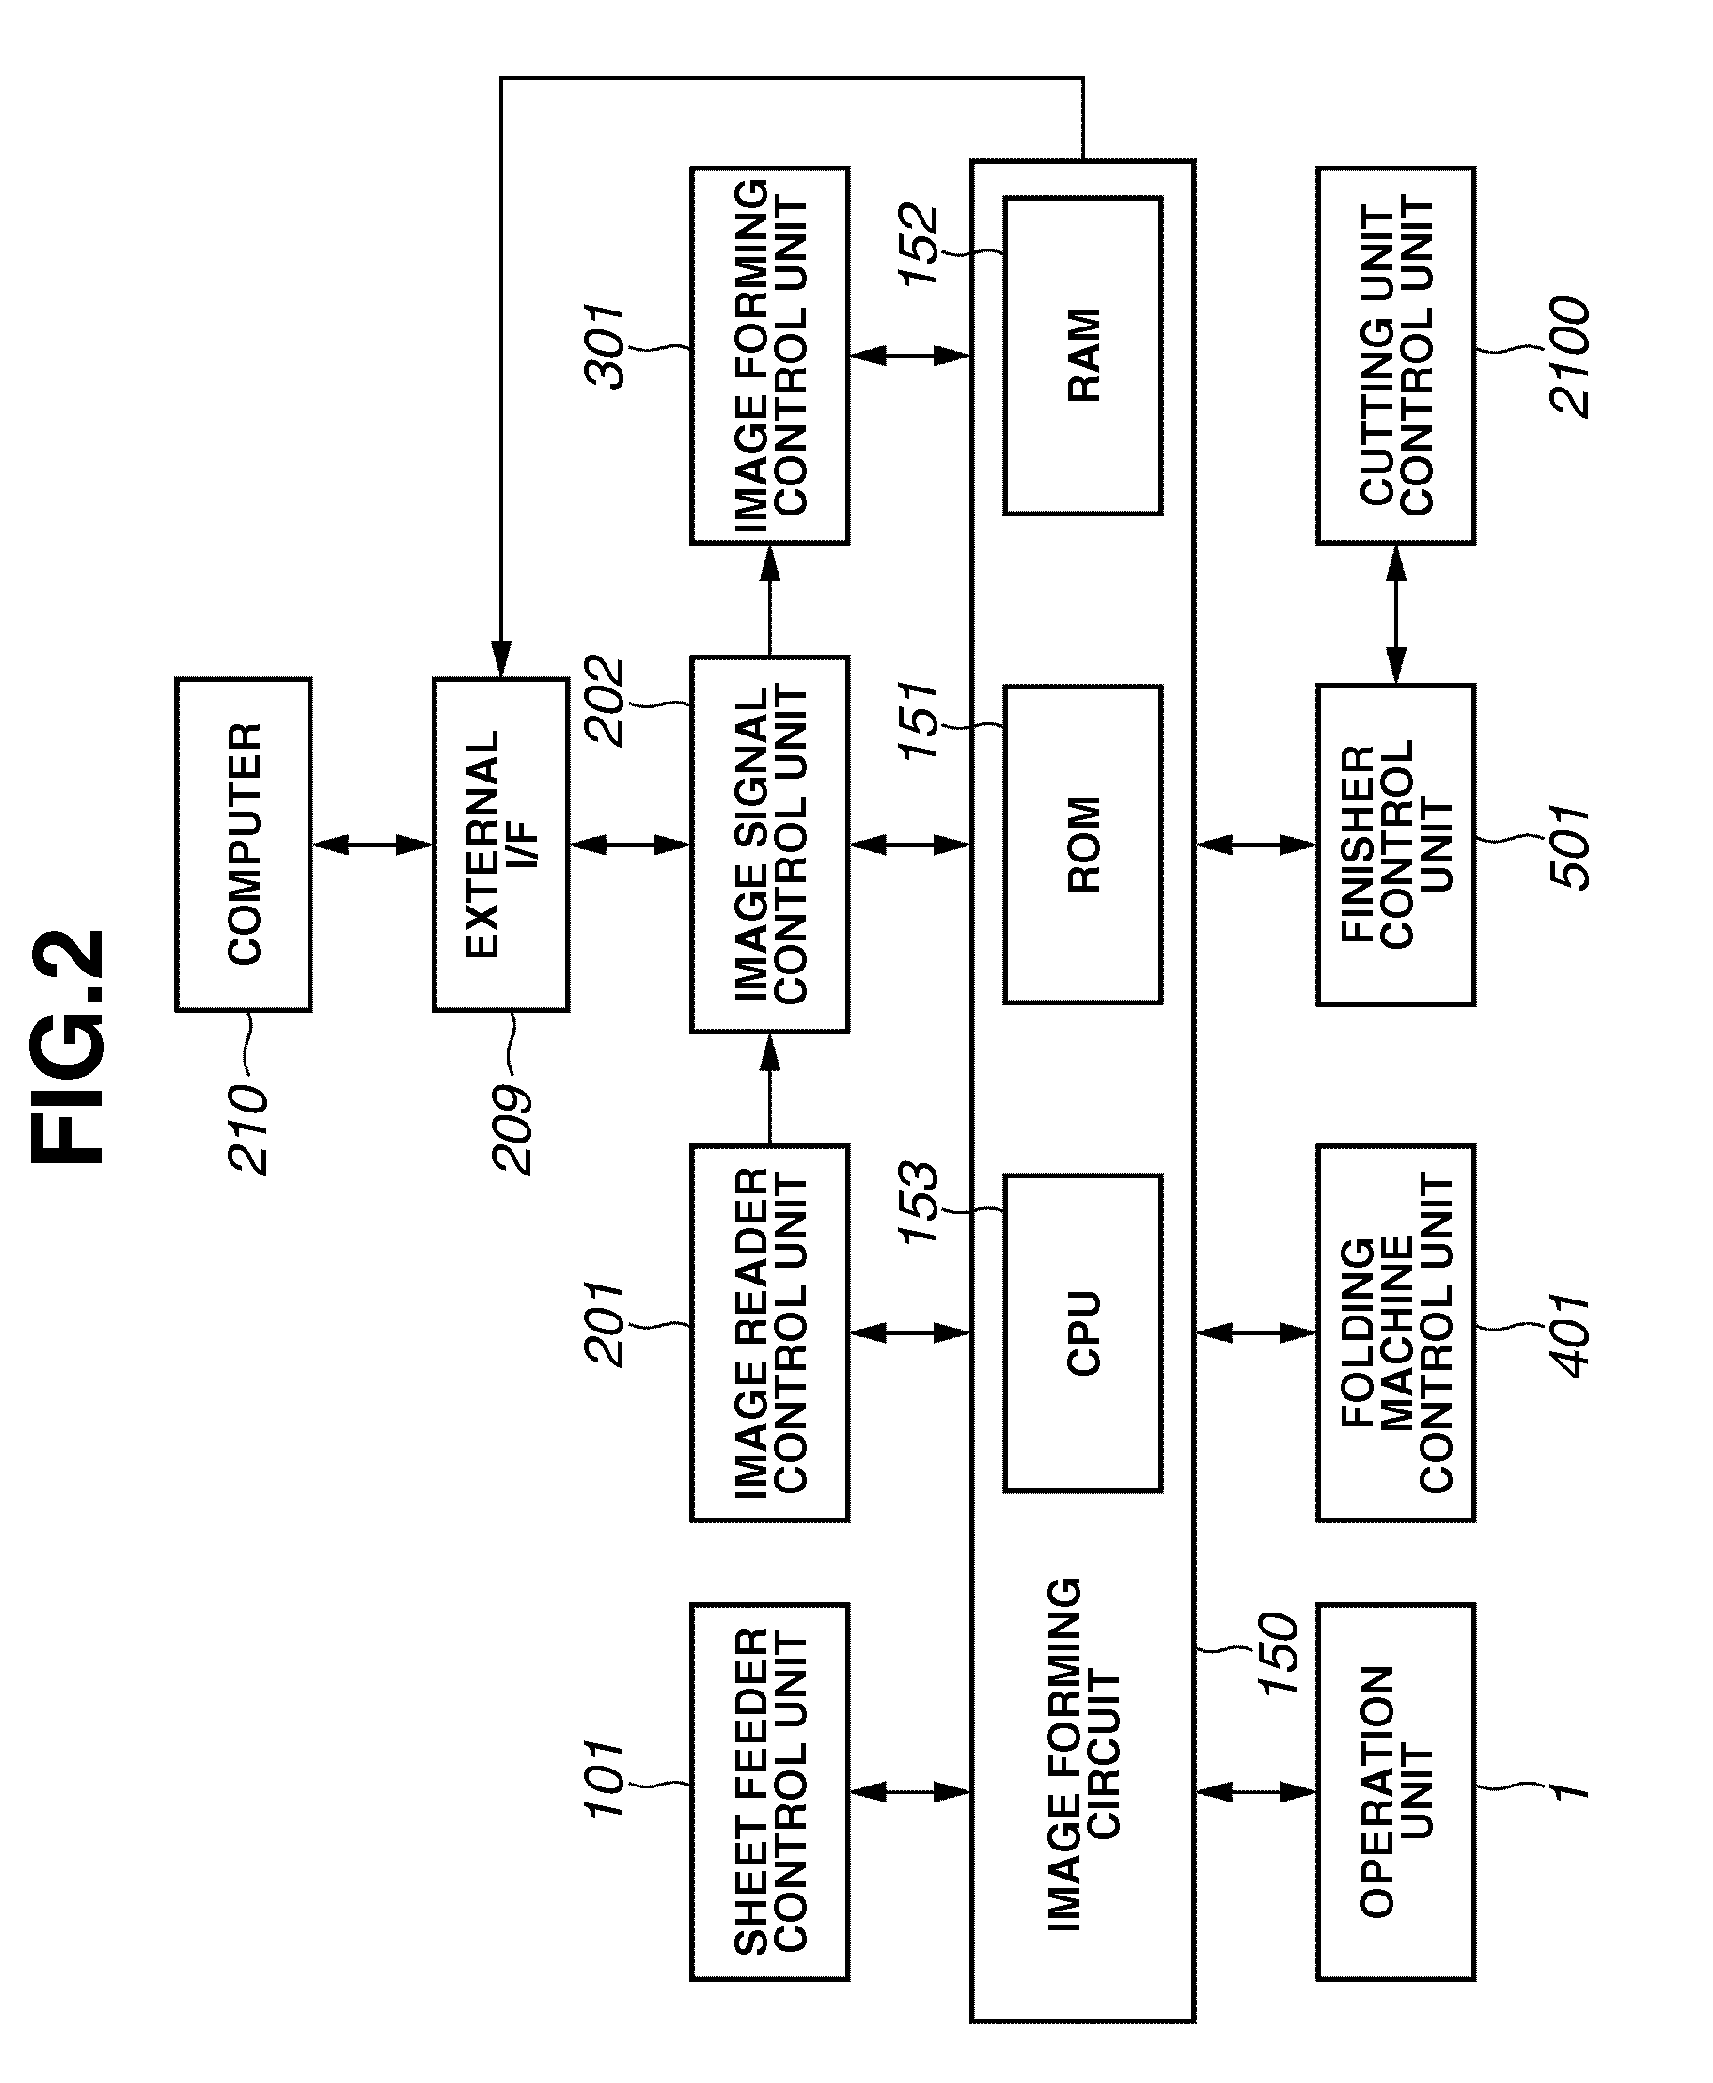 Sheet processing apparatus and method